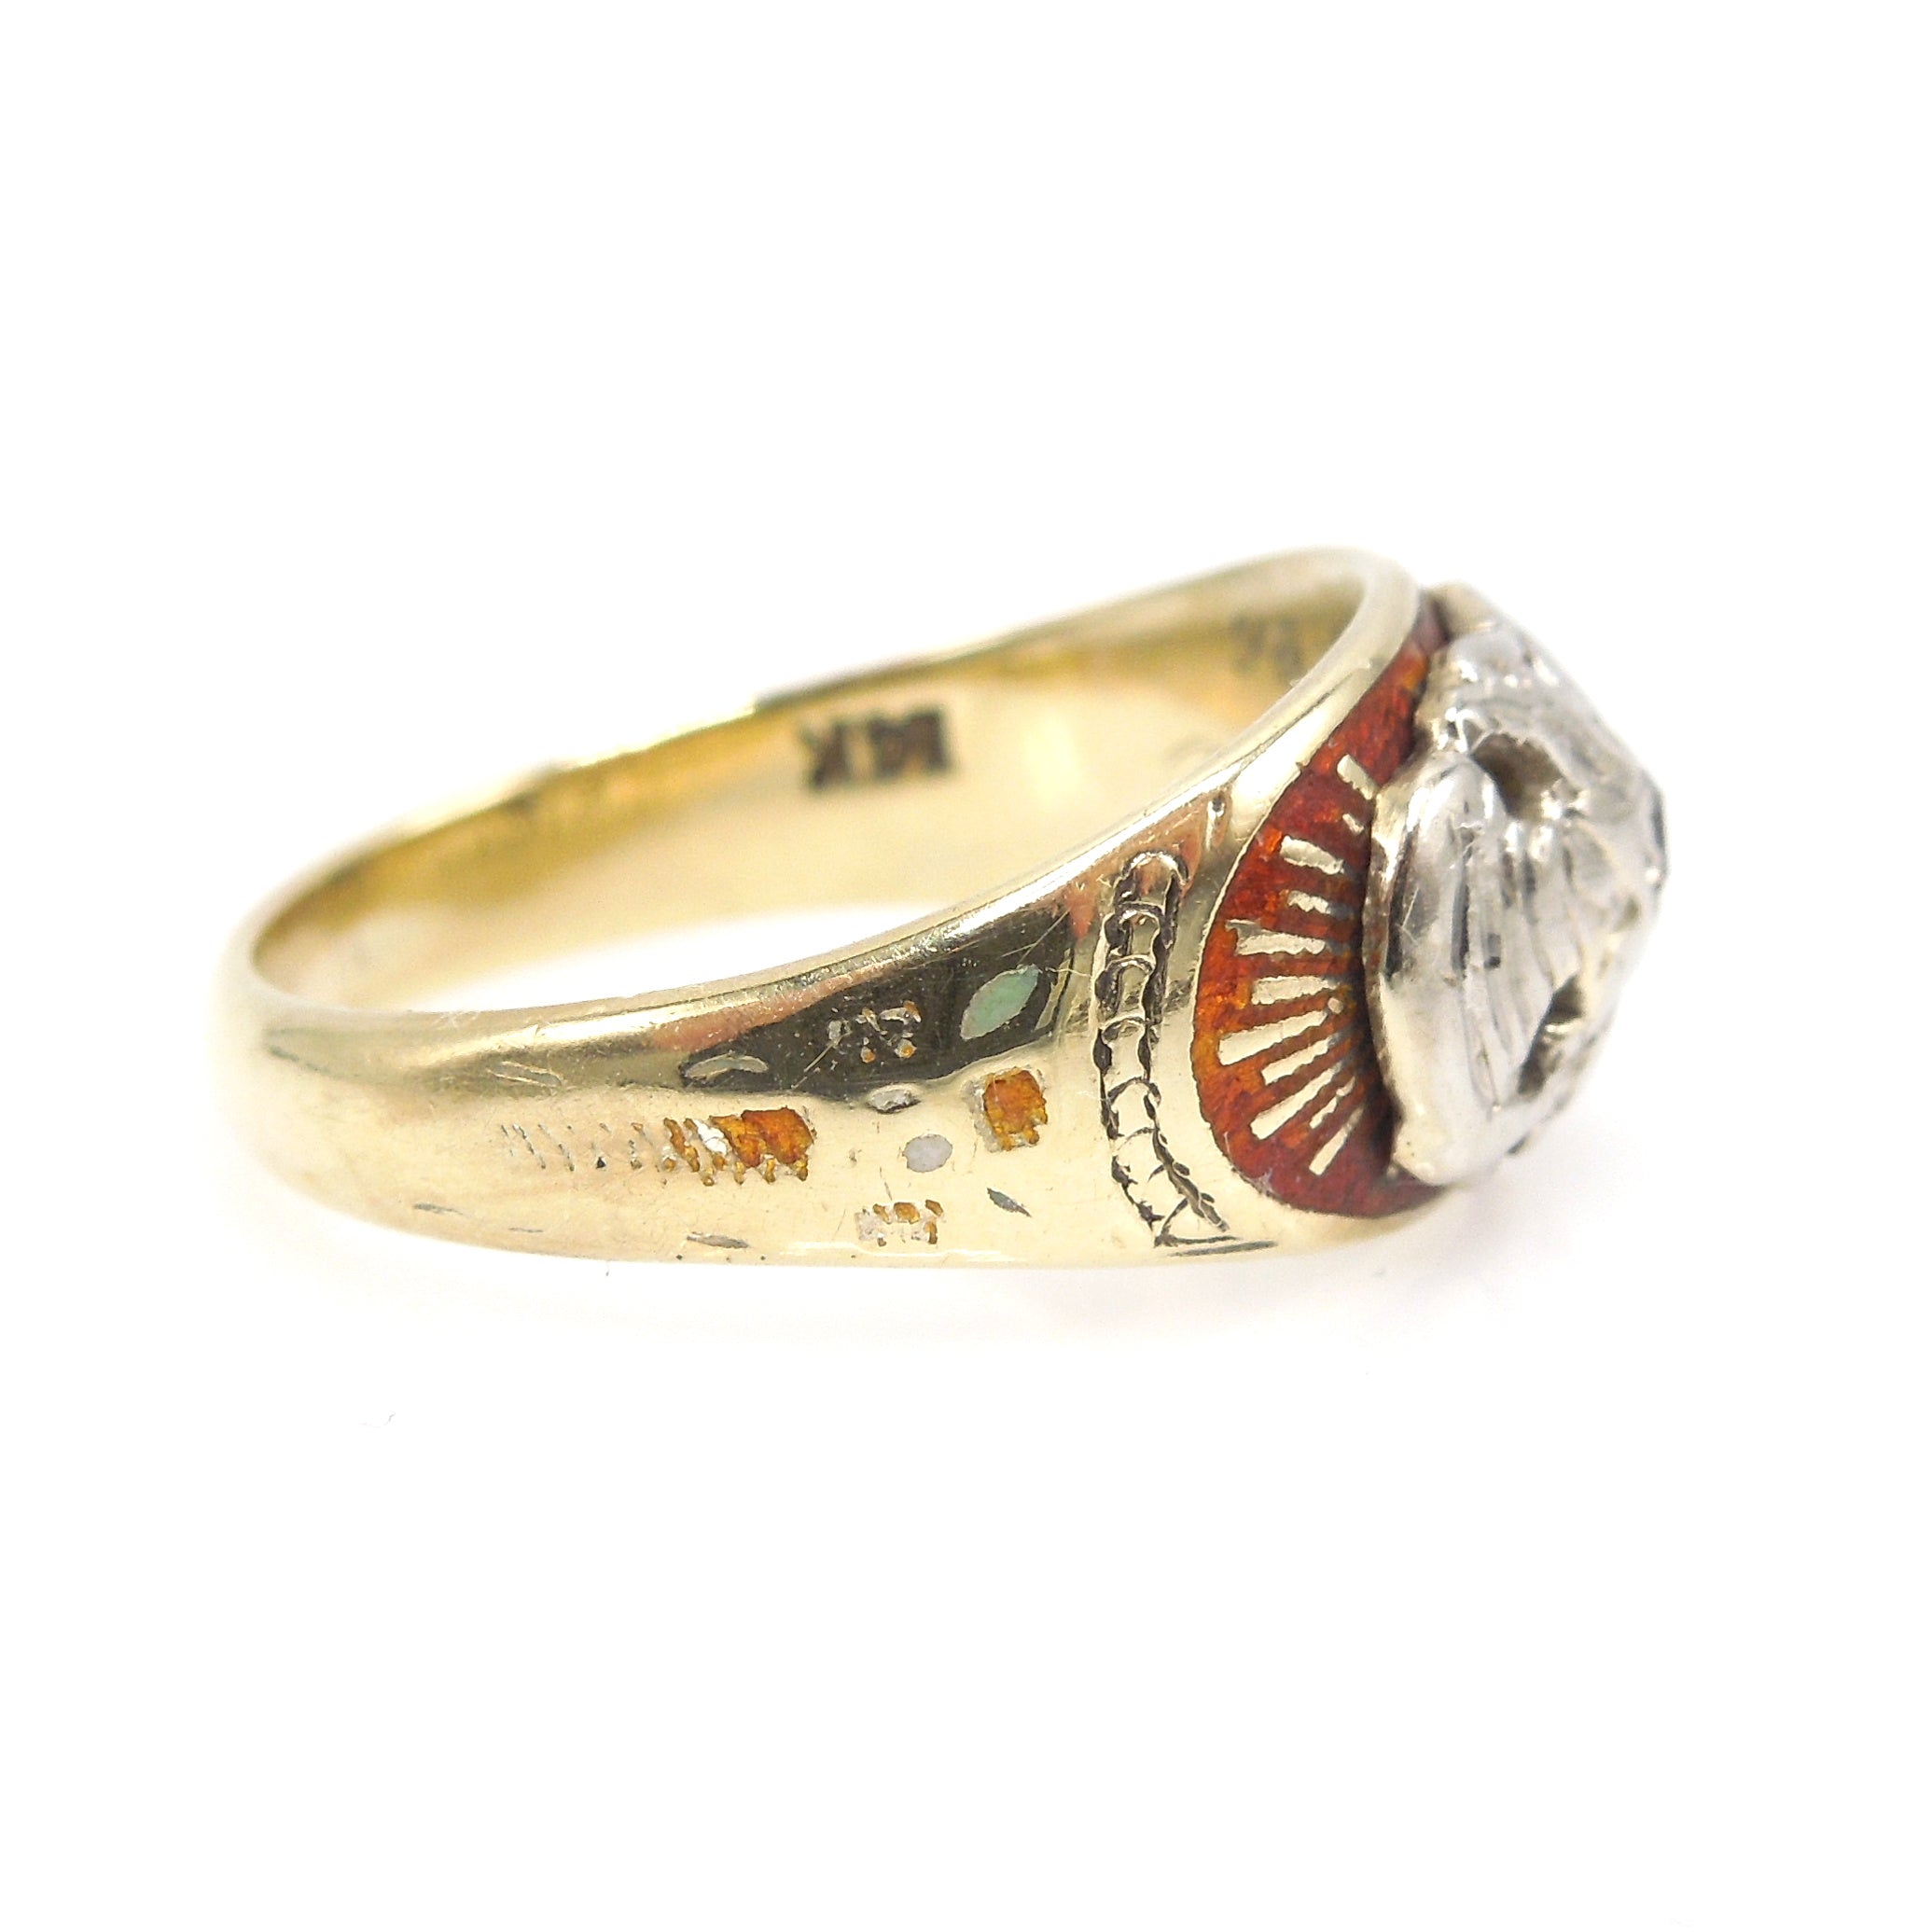 32nd Degree Freemason Masonic Ring - 14K Yellow Gold and Platinum - Enamel - Diamond